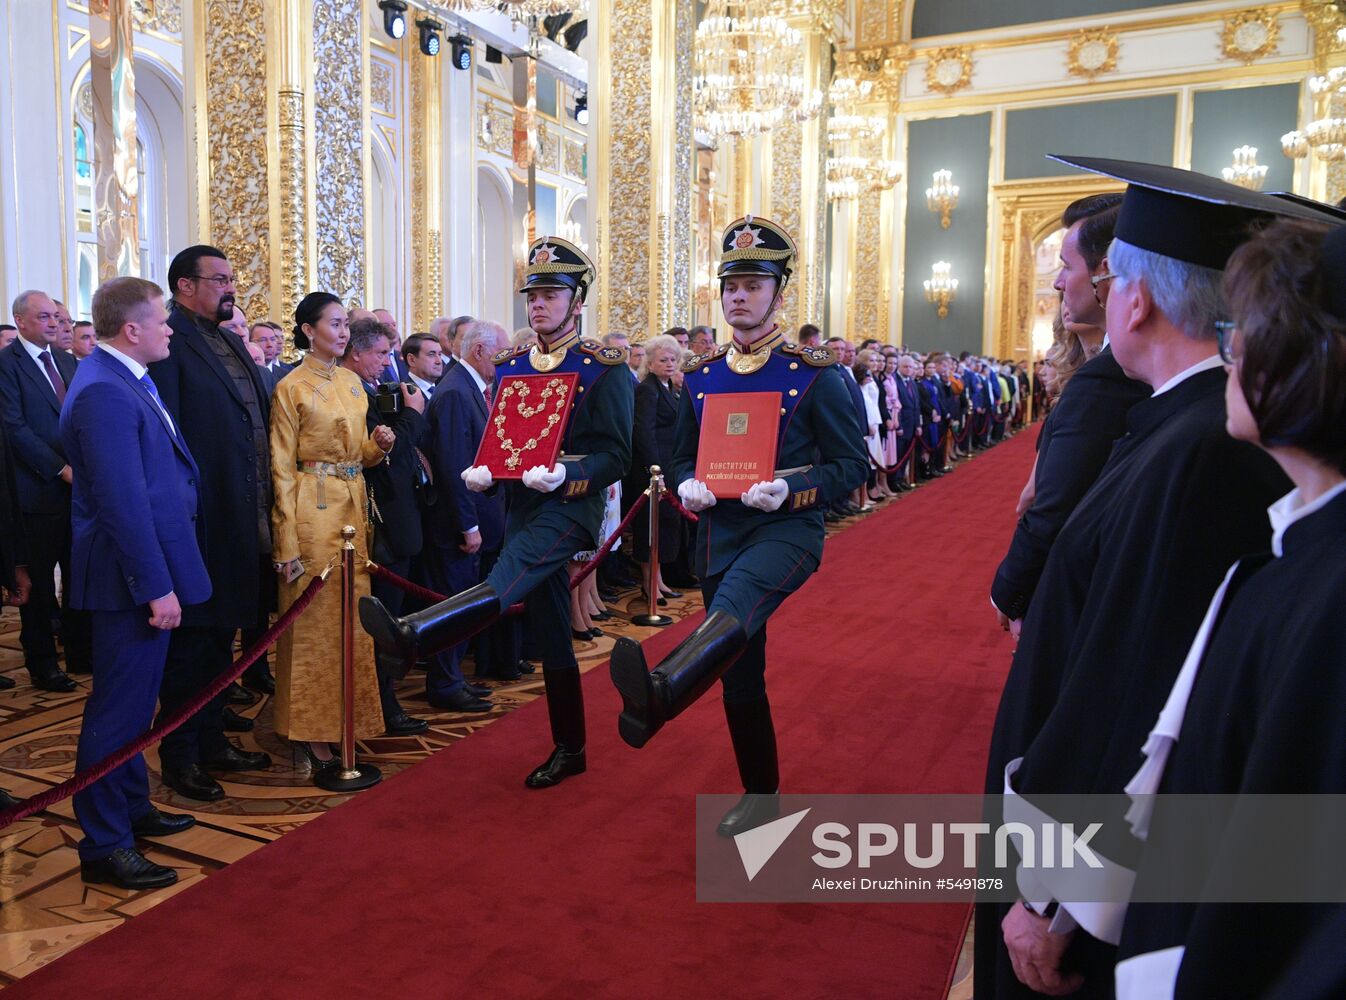 Inauguration of Russian President Vladimir Putin